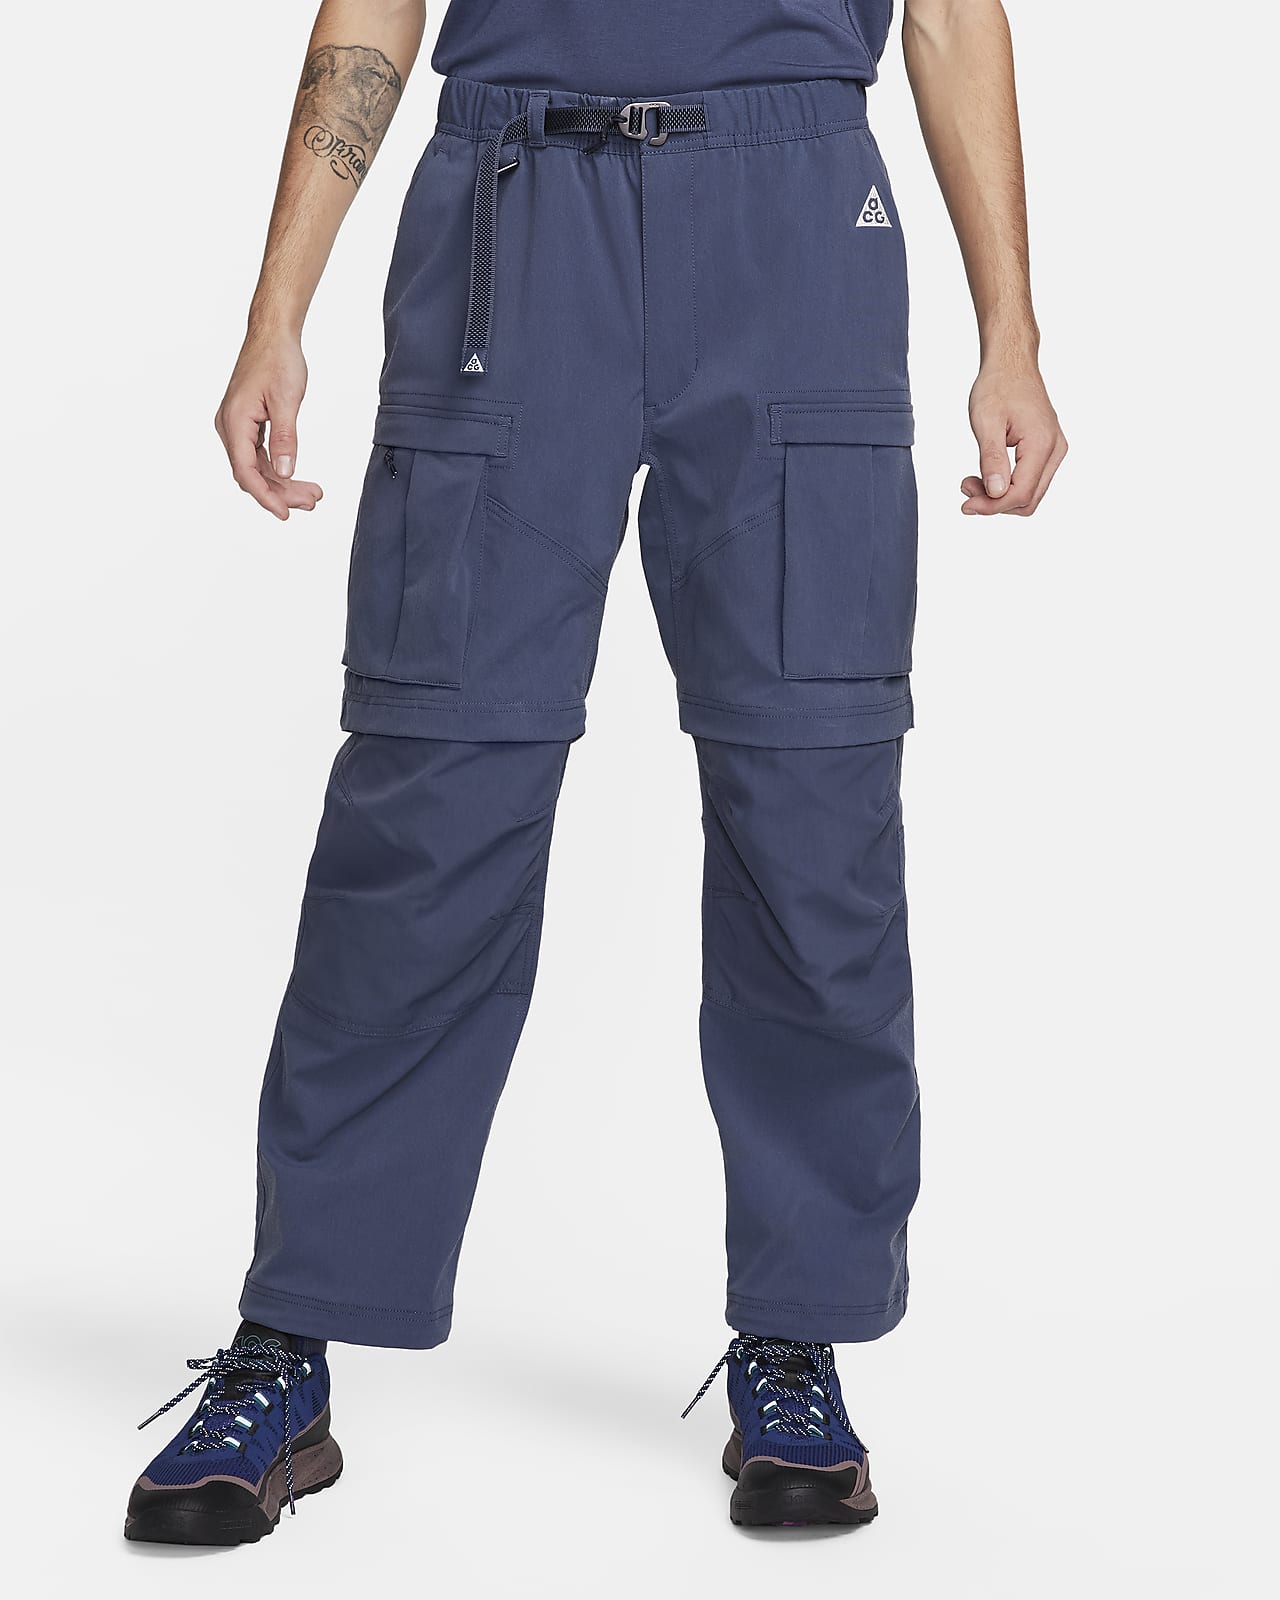 Nike Sportswear PANT - Cargo trousers - black - Zalando.de